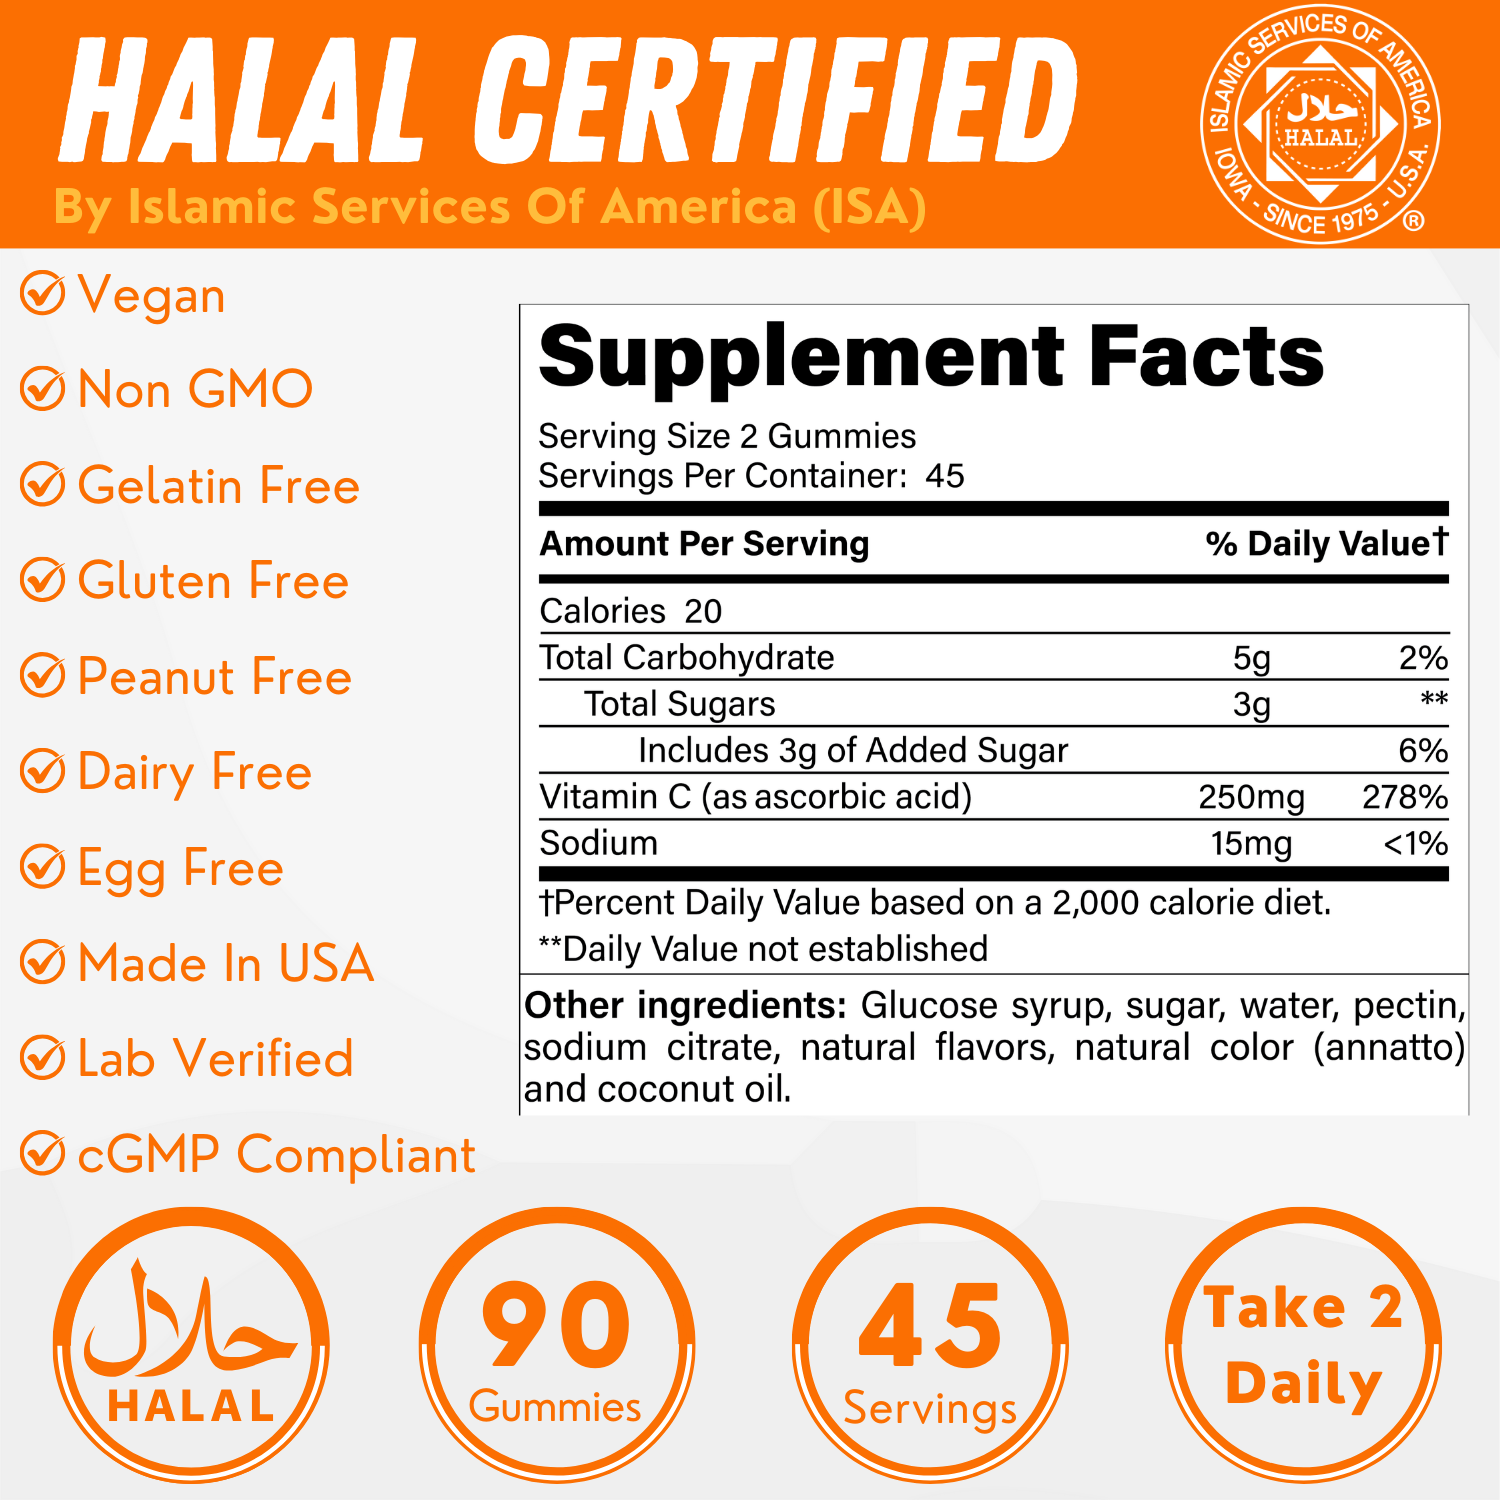 Pack of 3 - Halal Vitamin C